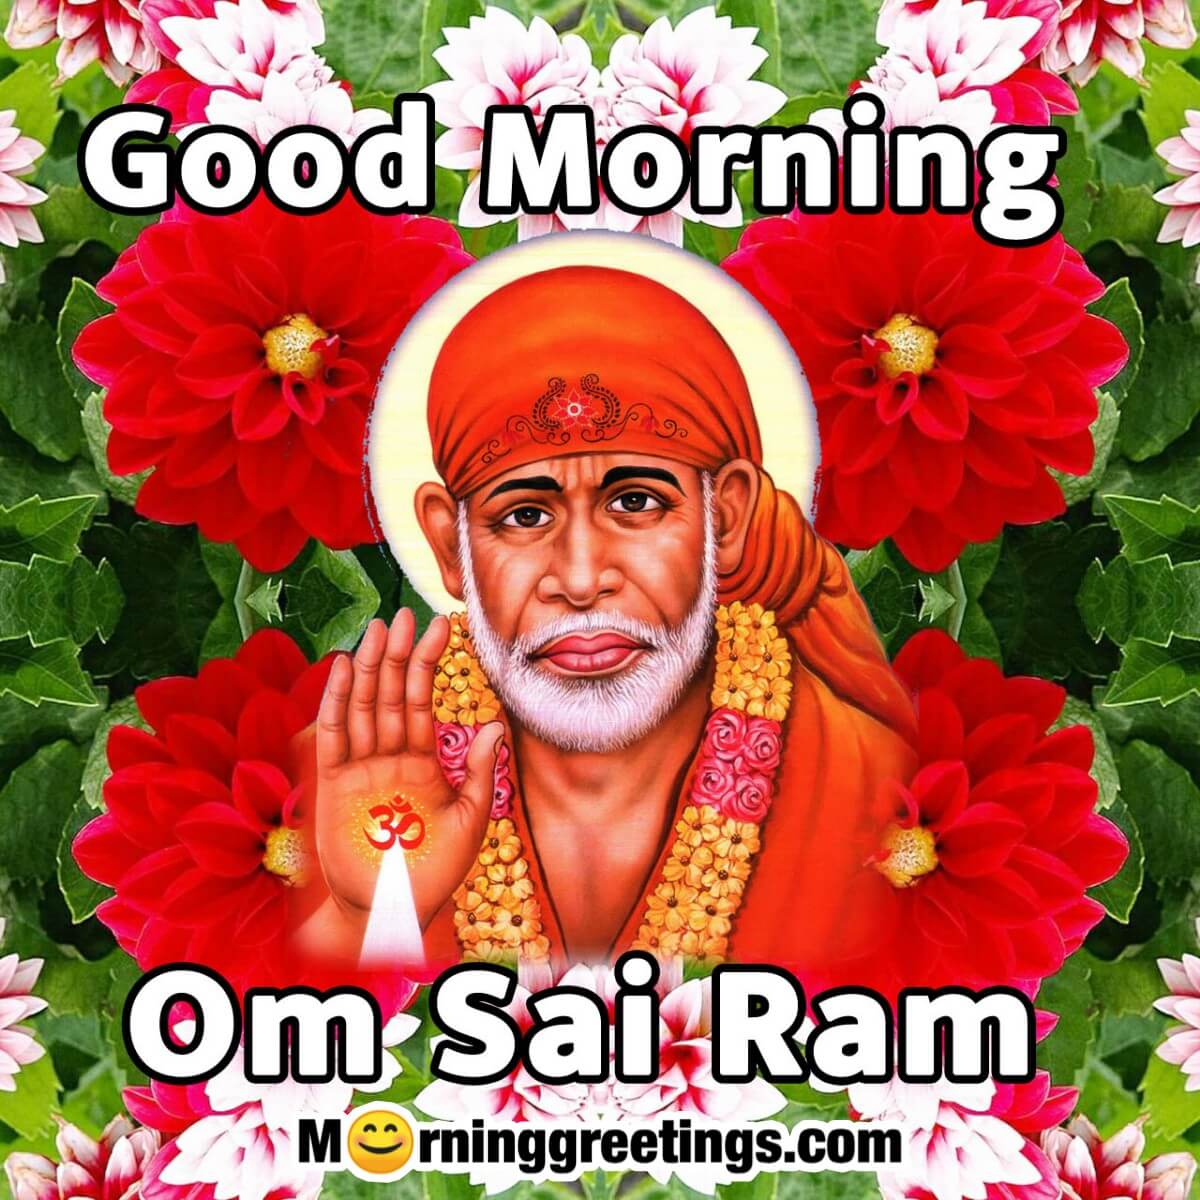 Good Morning Om Sai Ram Image